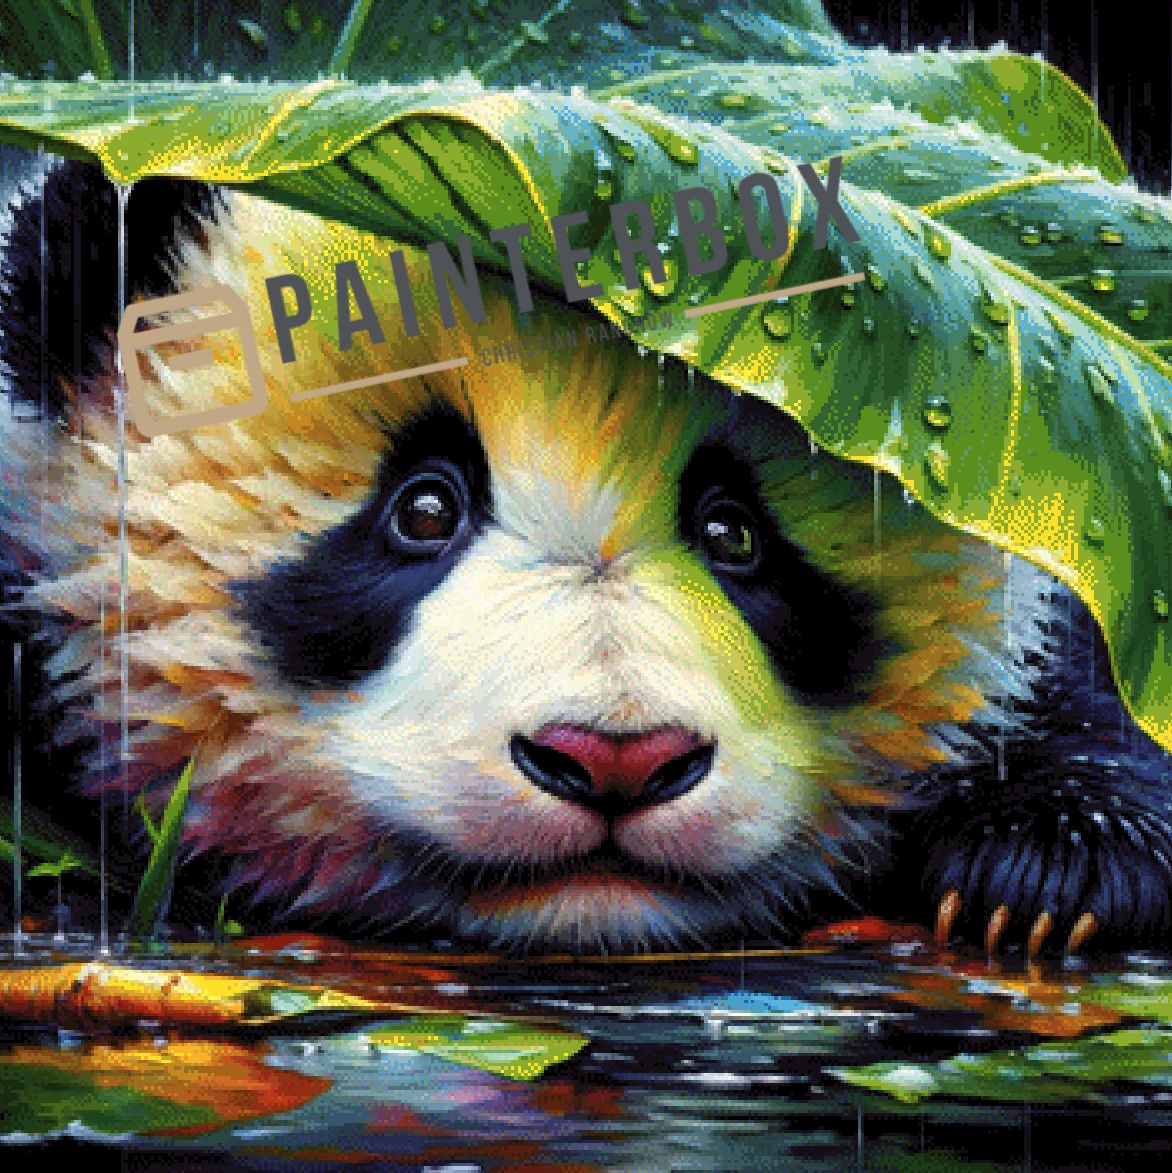 Panda in the Rain by CaroFelicia - 330 Farben